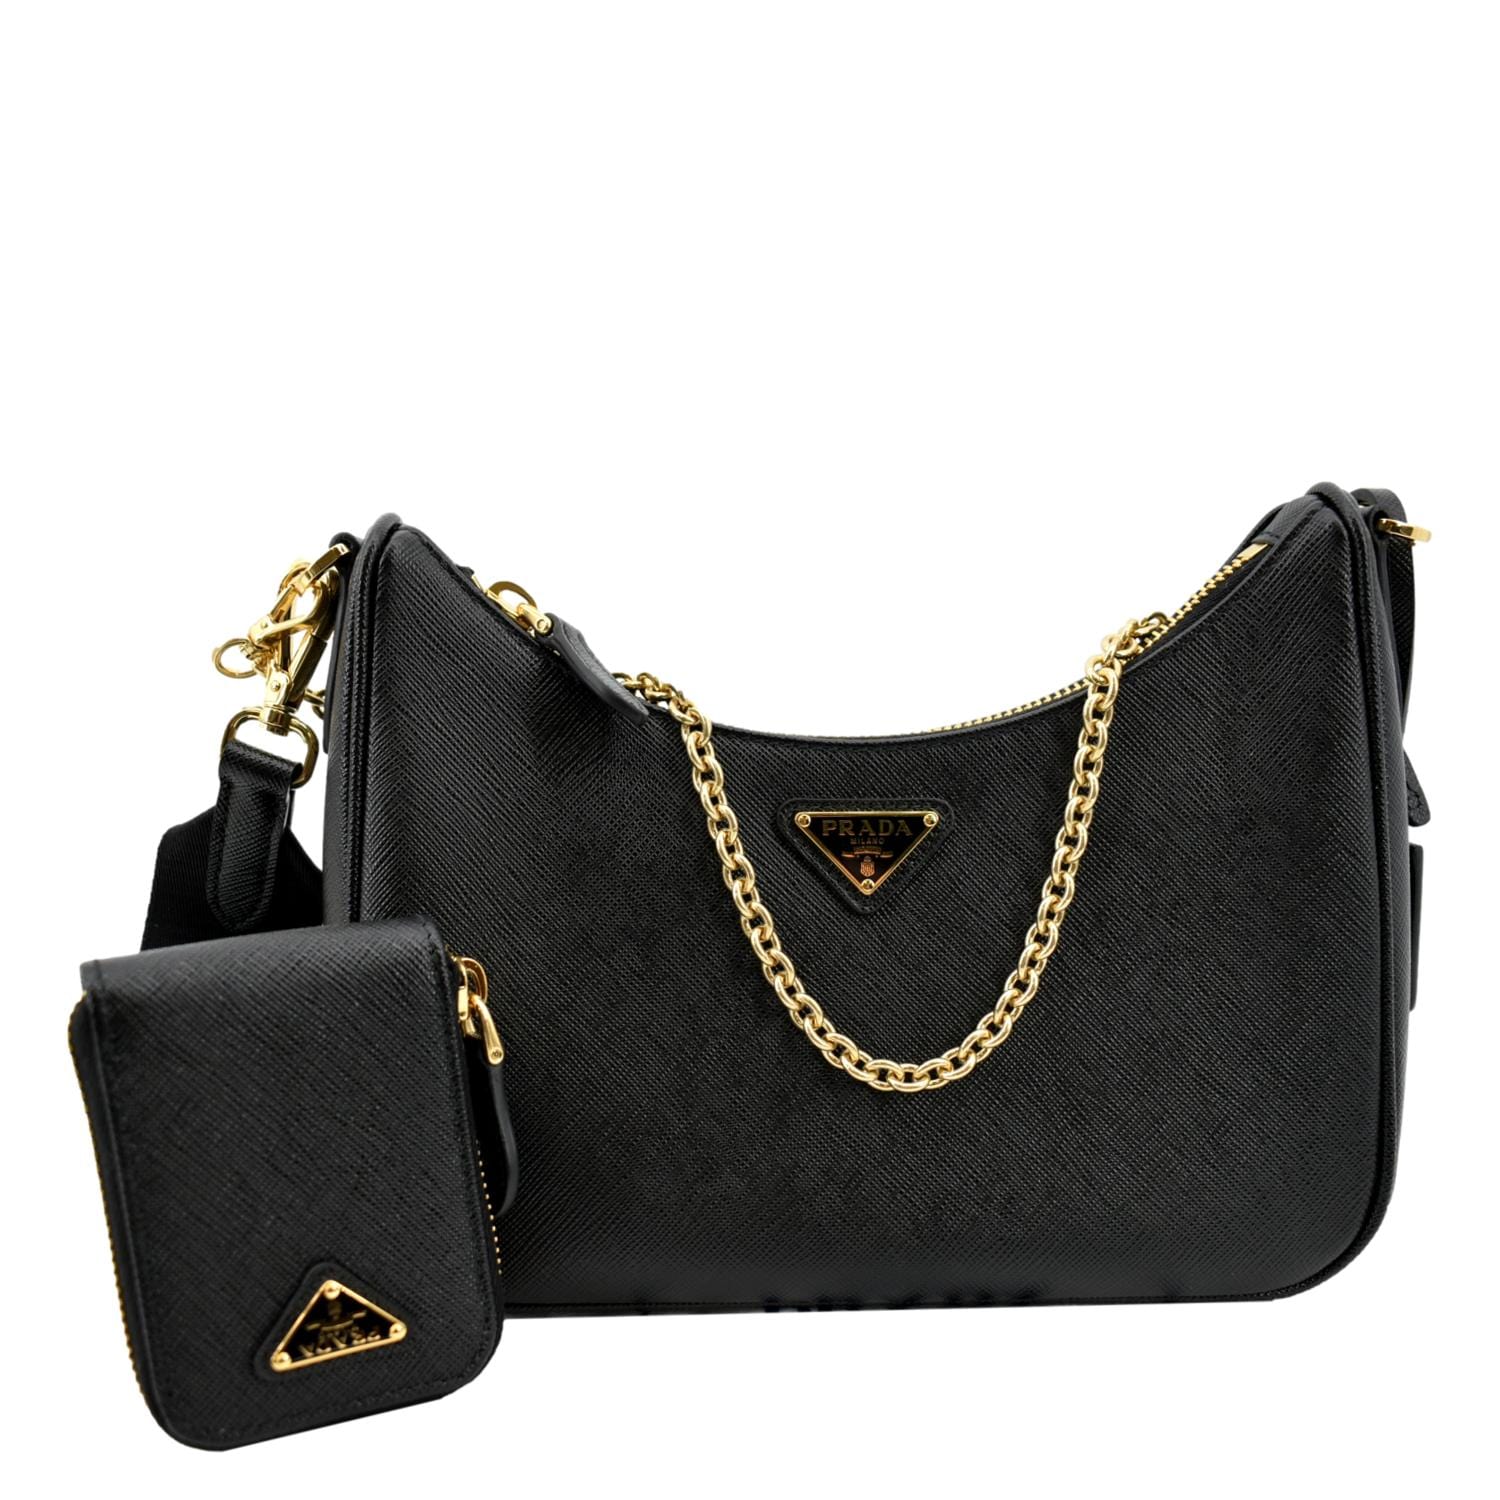 Prada Saffiano Leather Re-Edition Shoulder Bag - Black - One Size